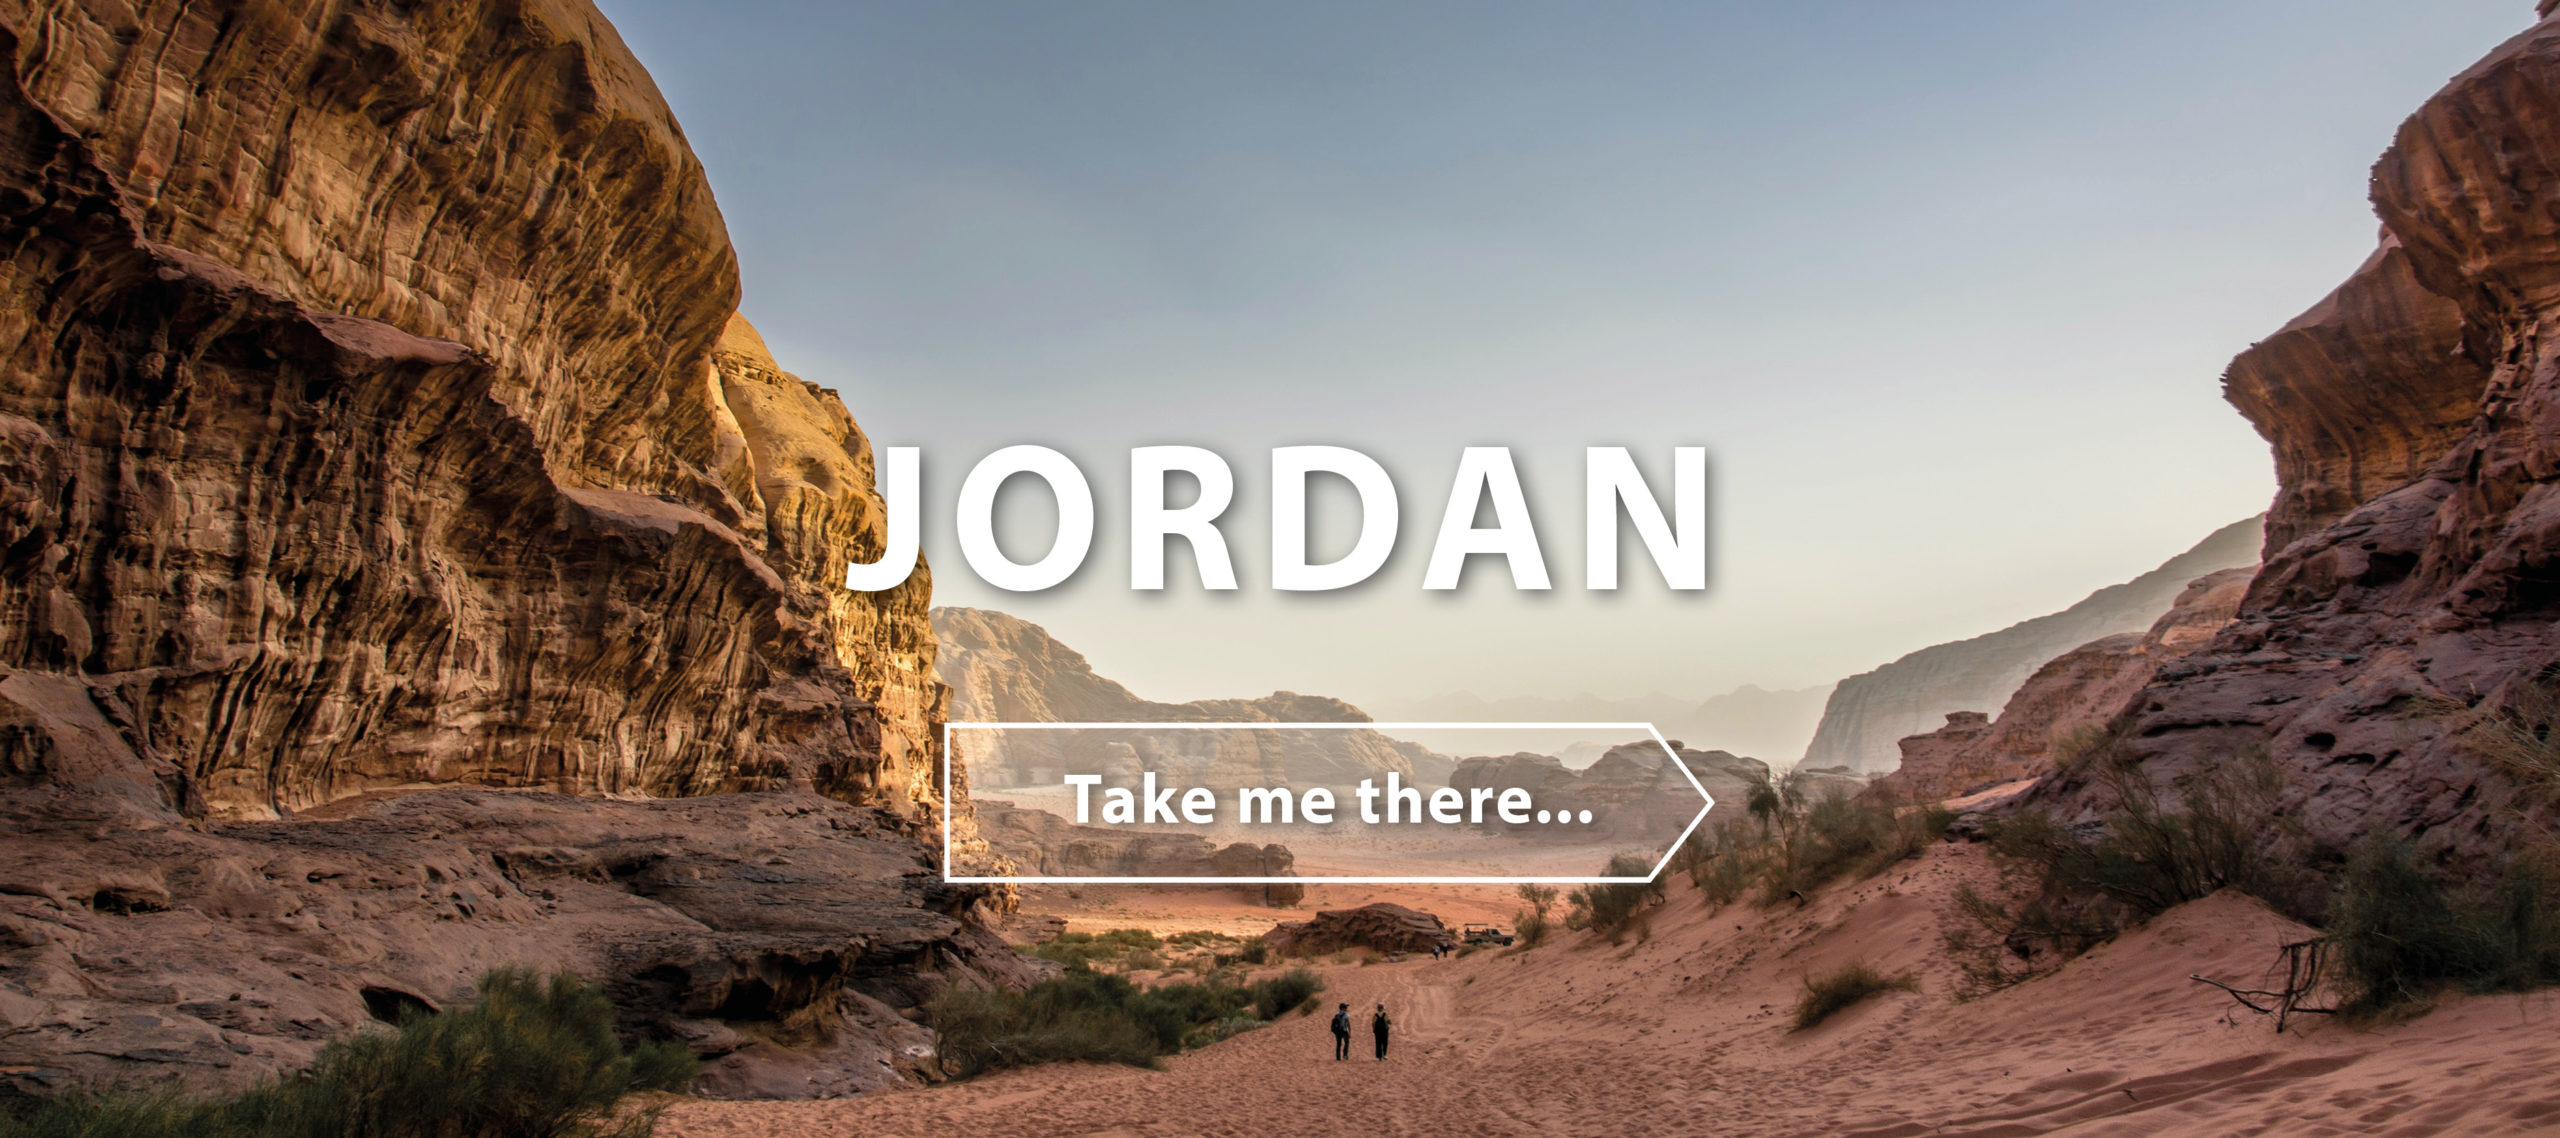 Jordan holidays with Holiday Architects